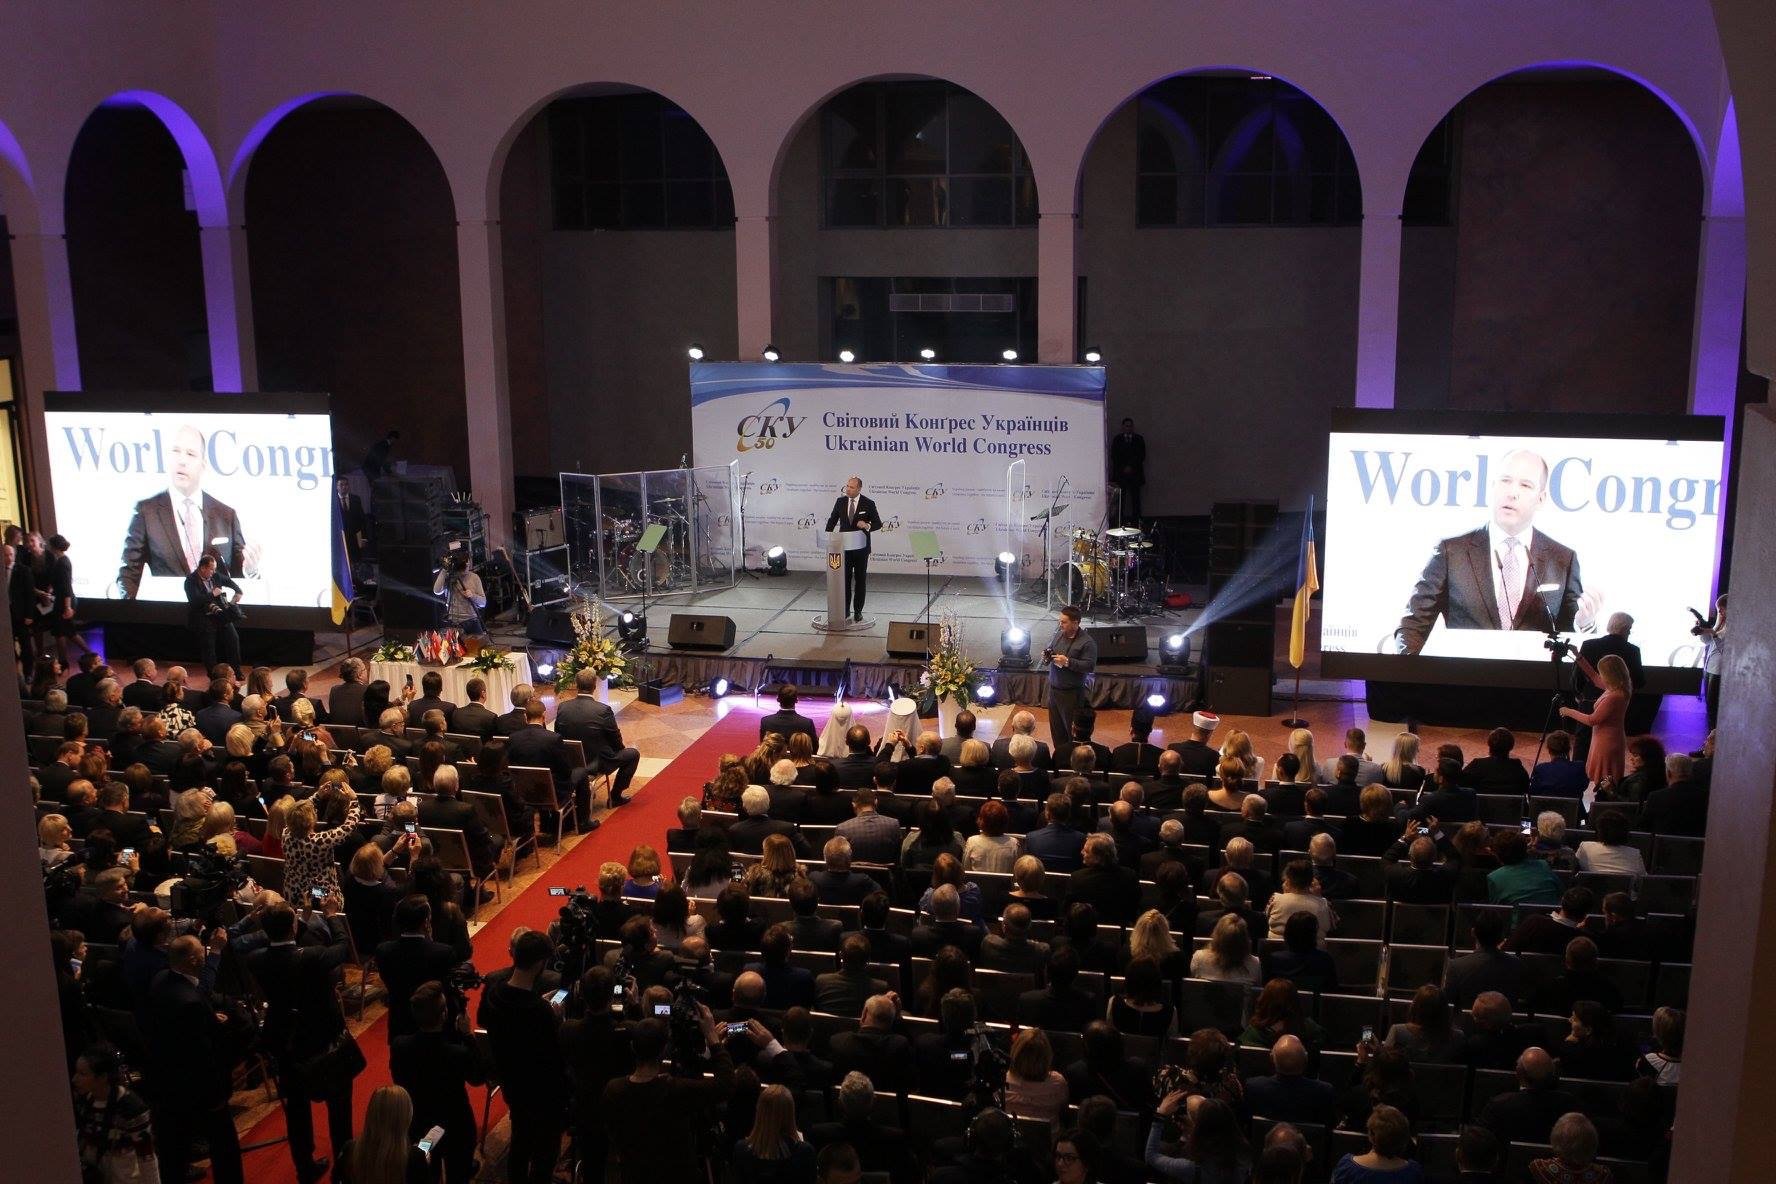 XII Congress of the Ukrainian World Congress